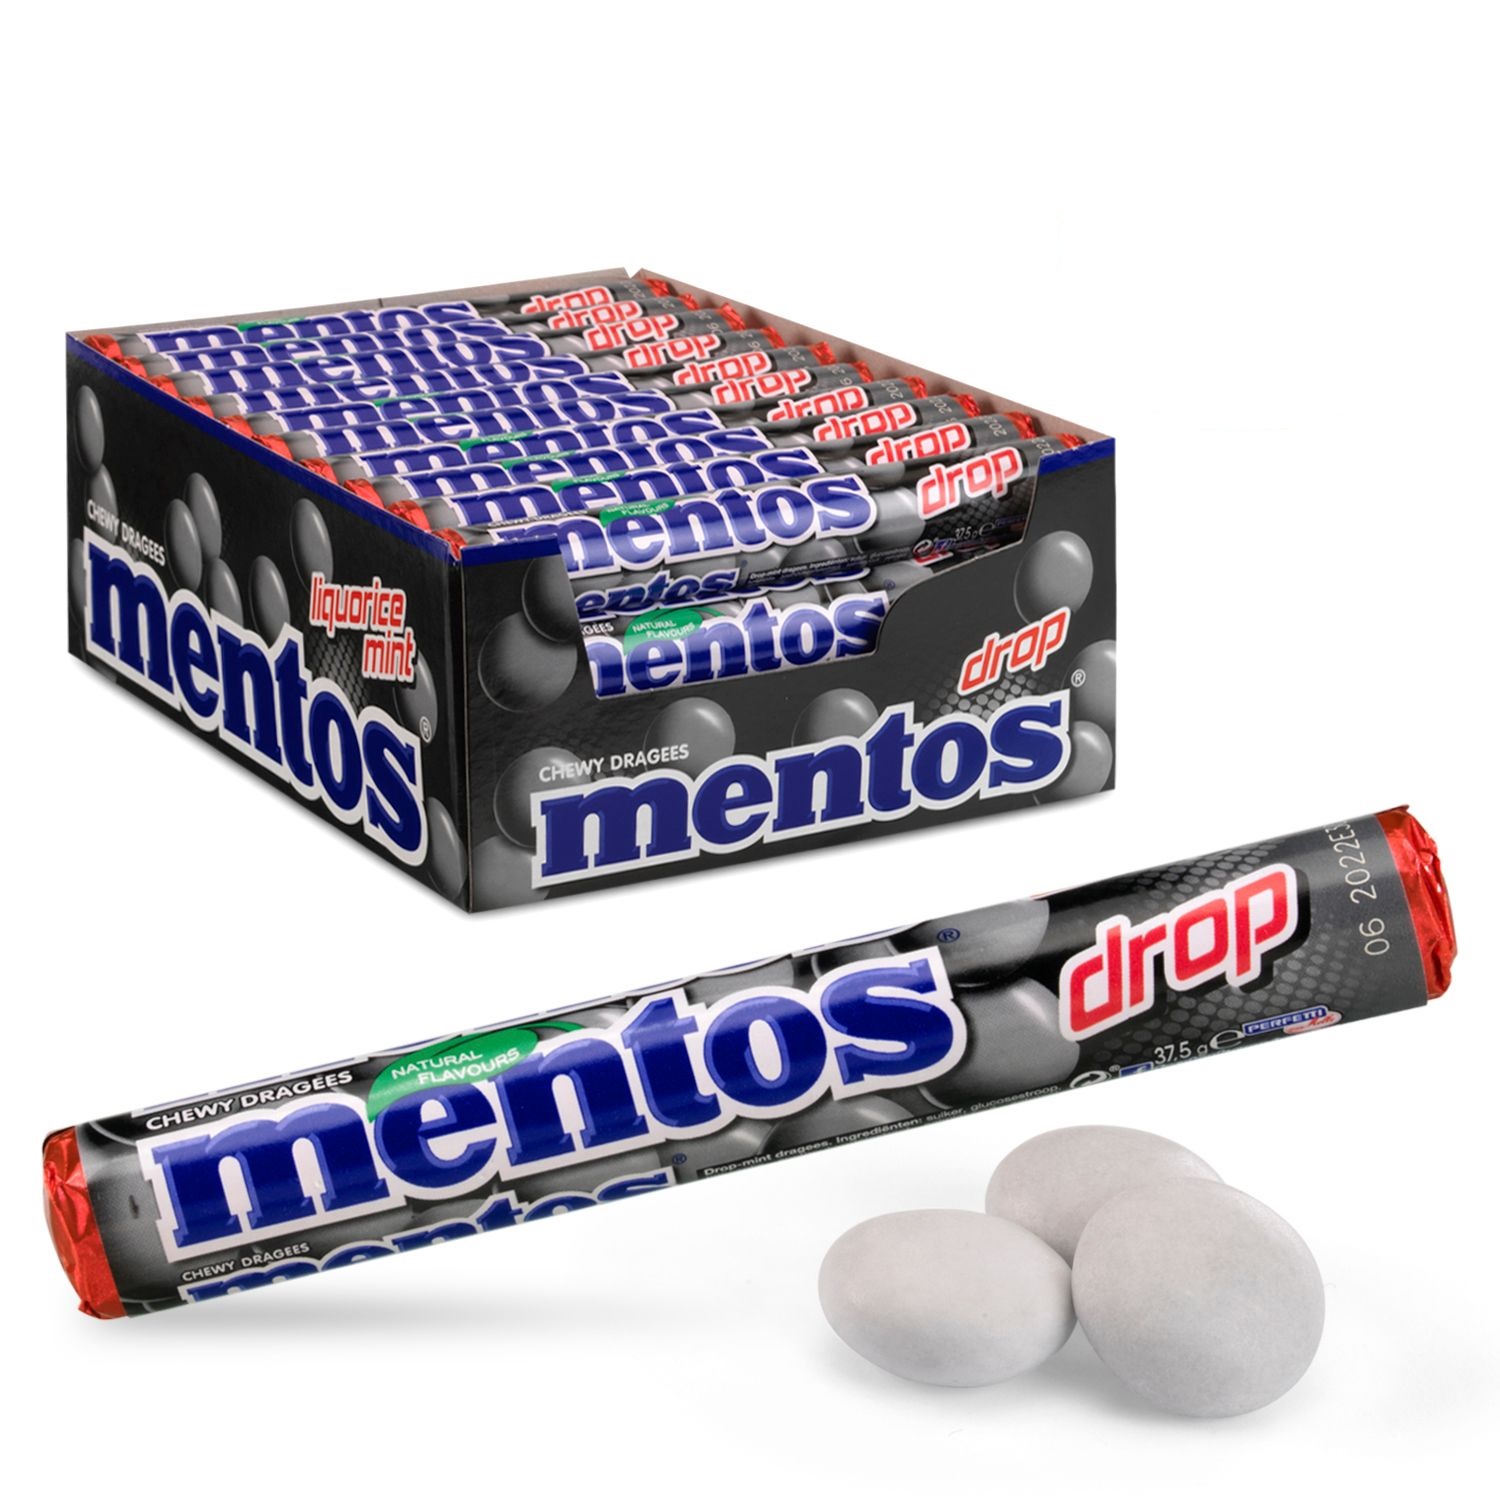 https://worldofeurope.com/wp-content/uploads/2023/01/8723400775294-87317770-Mentos-Sweets-Mentos-Licorice-Drop-Rolls-1-2.jpeg